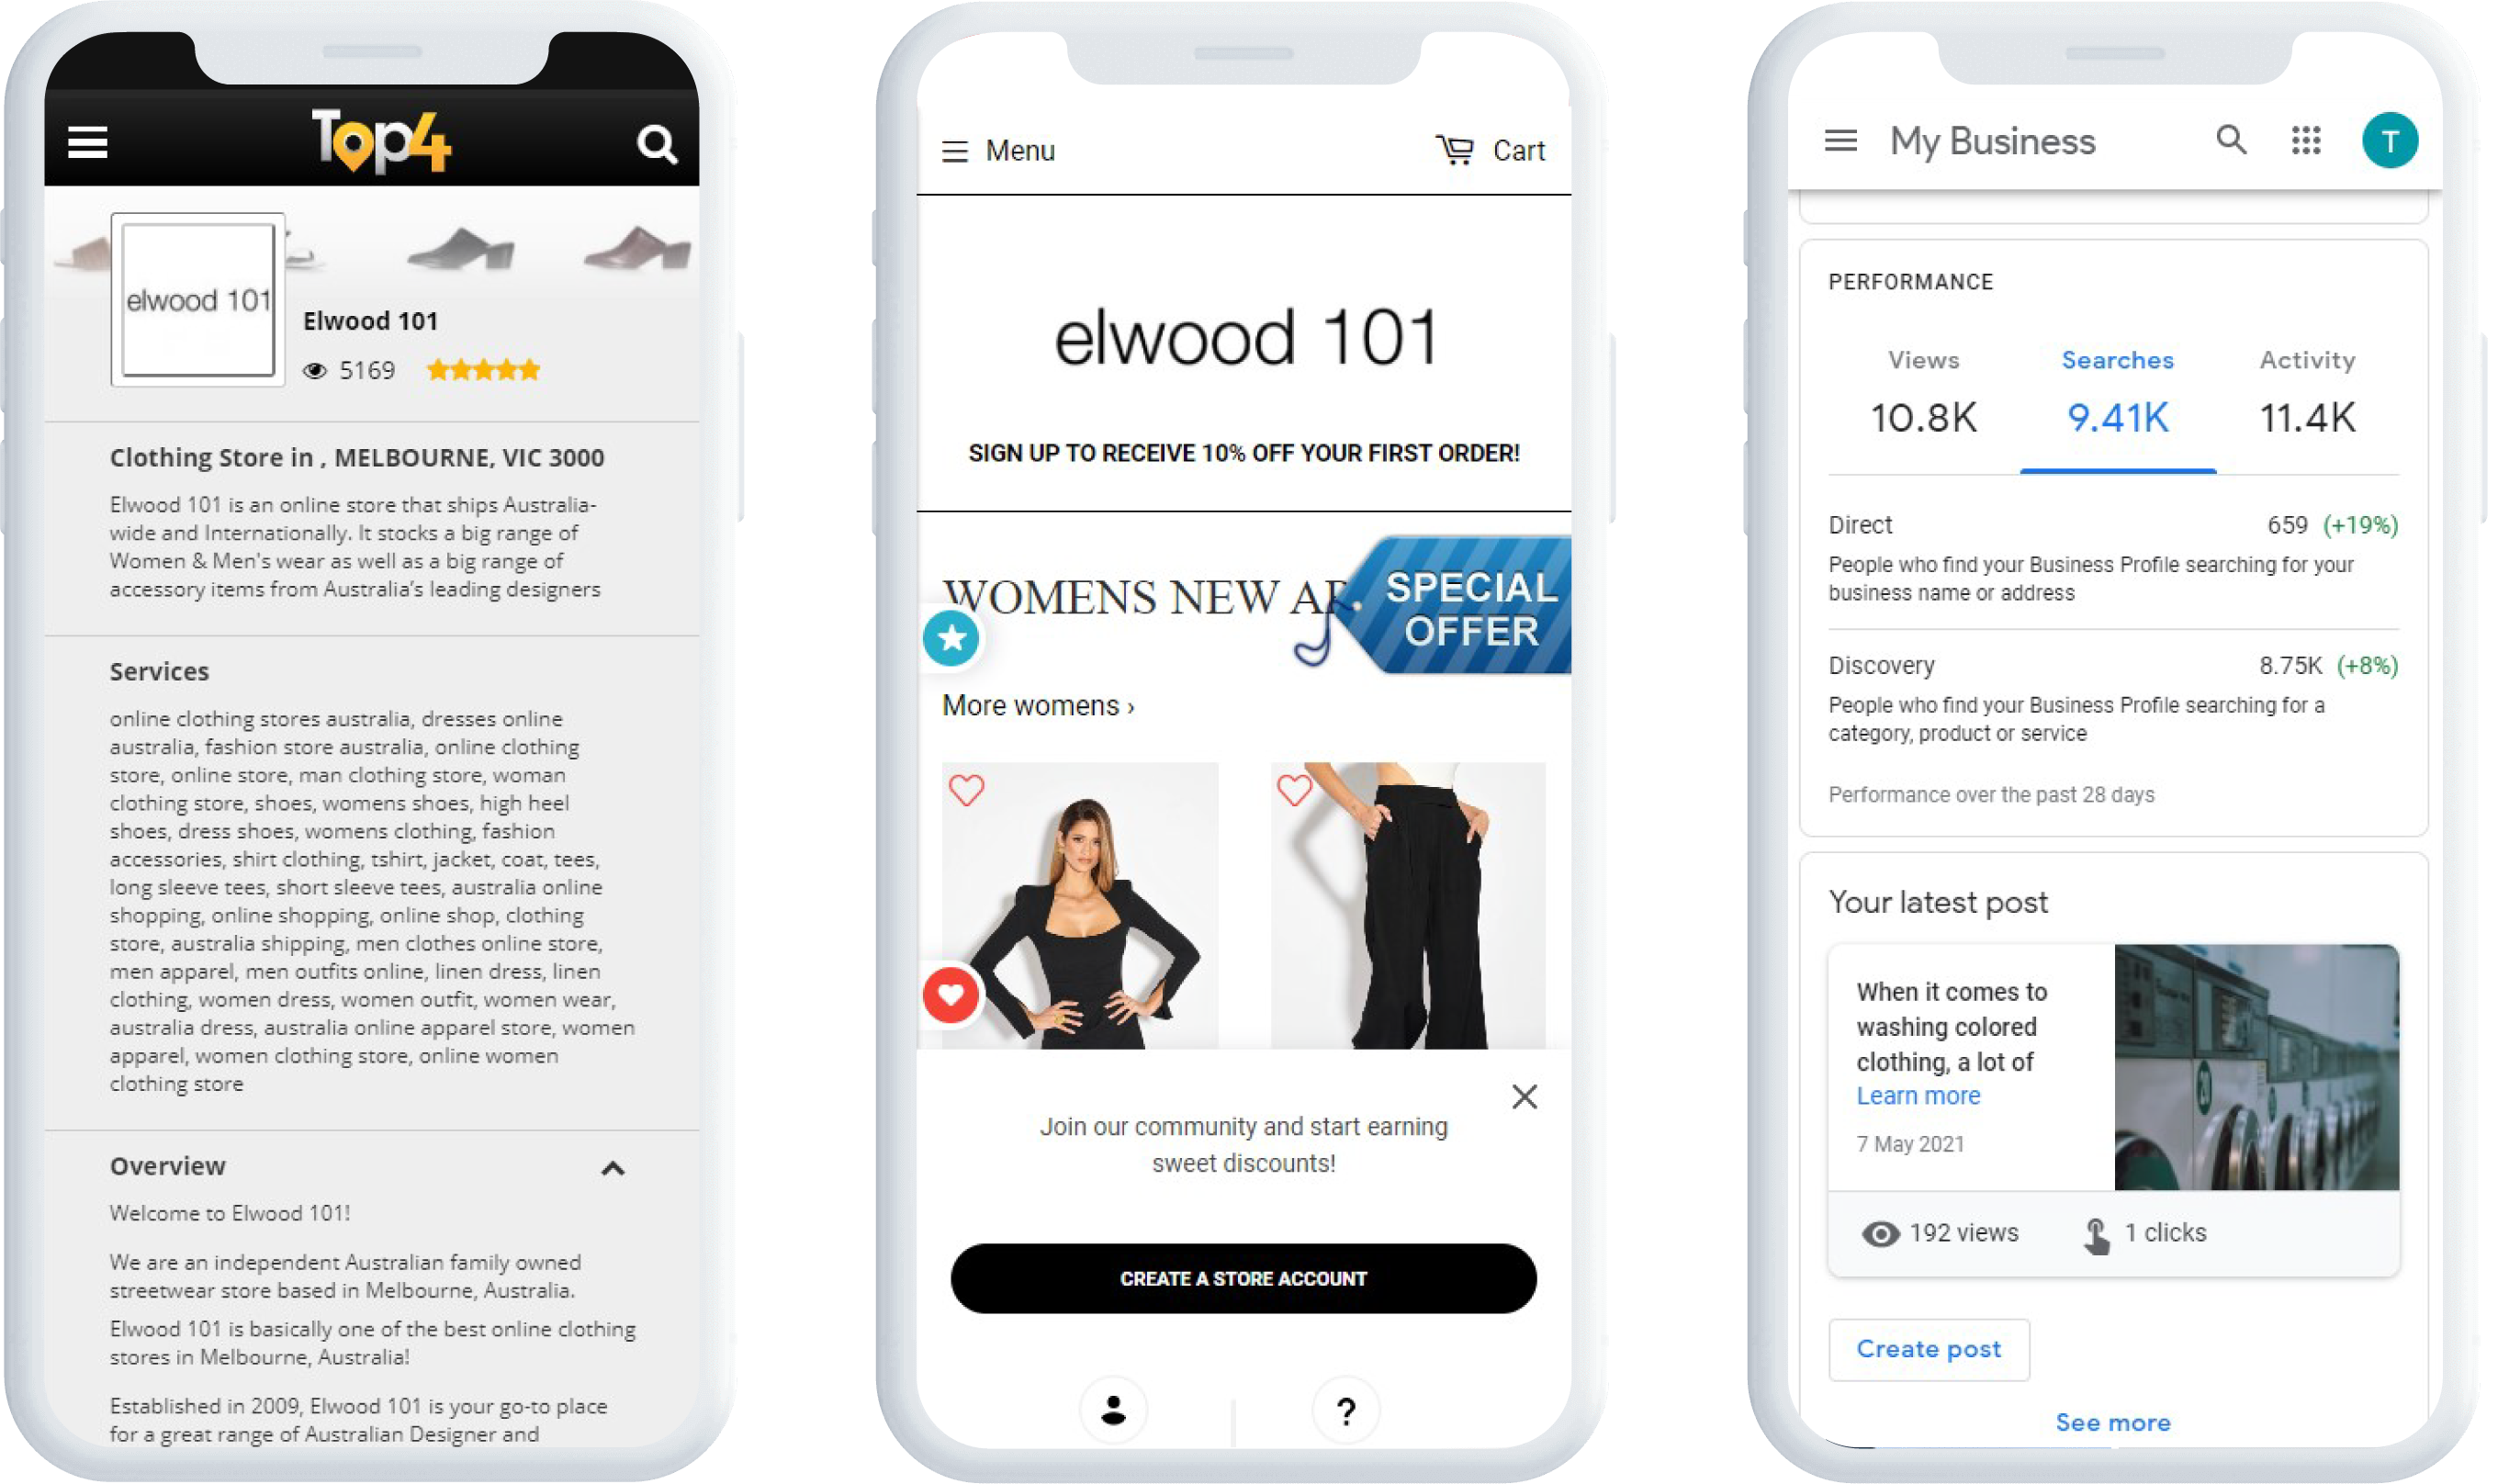 Elwood 101 – Digital Marketing Case Study – Top4 Marketing